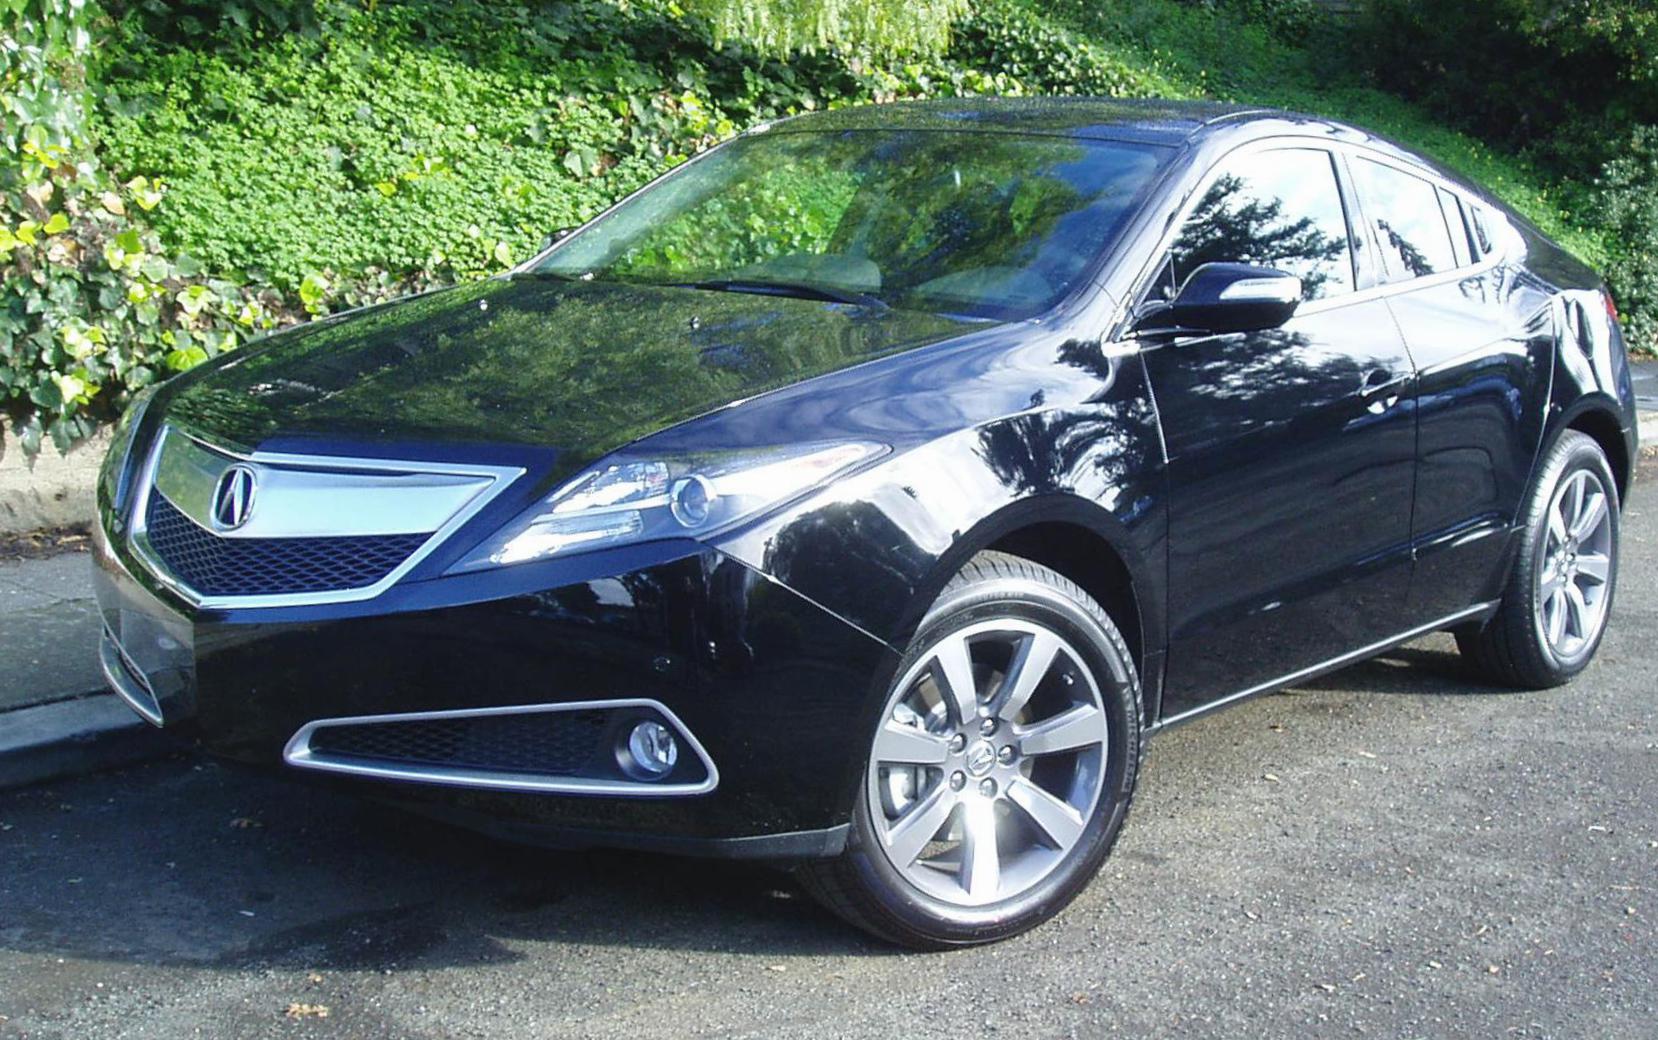 ZDX Acura used 2009